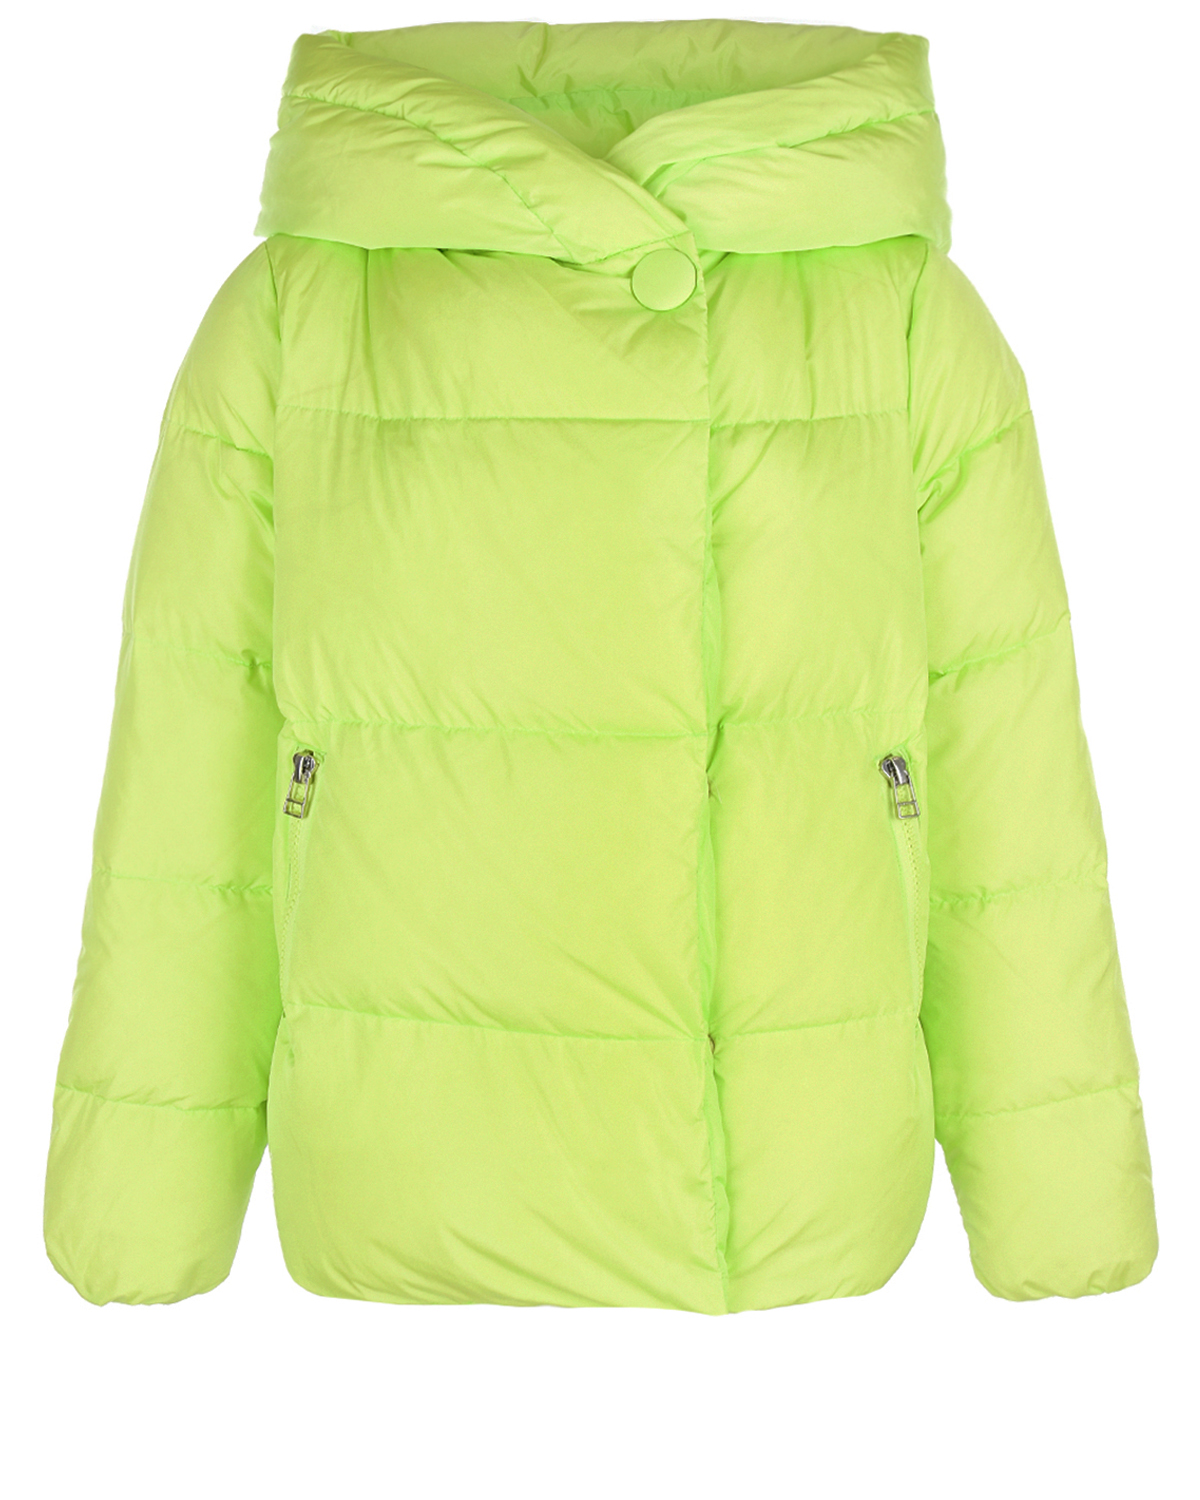 Зеленая куртка-пуховик Freedomday, размер 40, цвет салатовый - фото 1